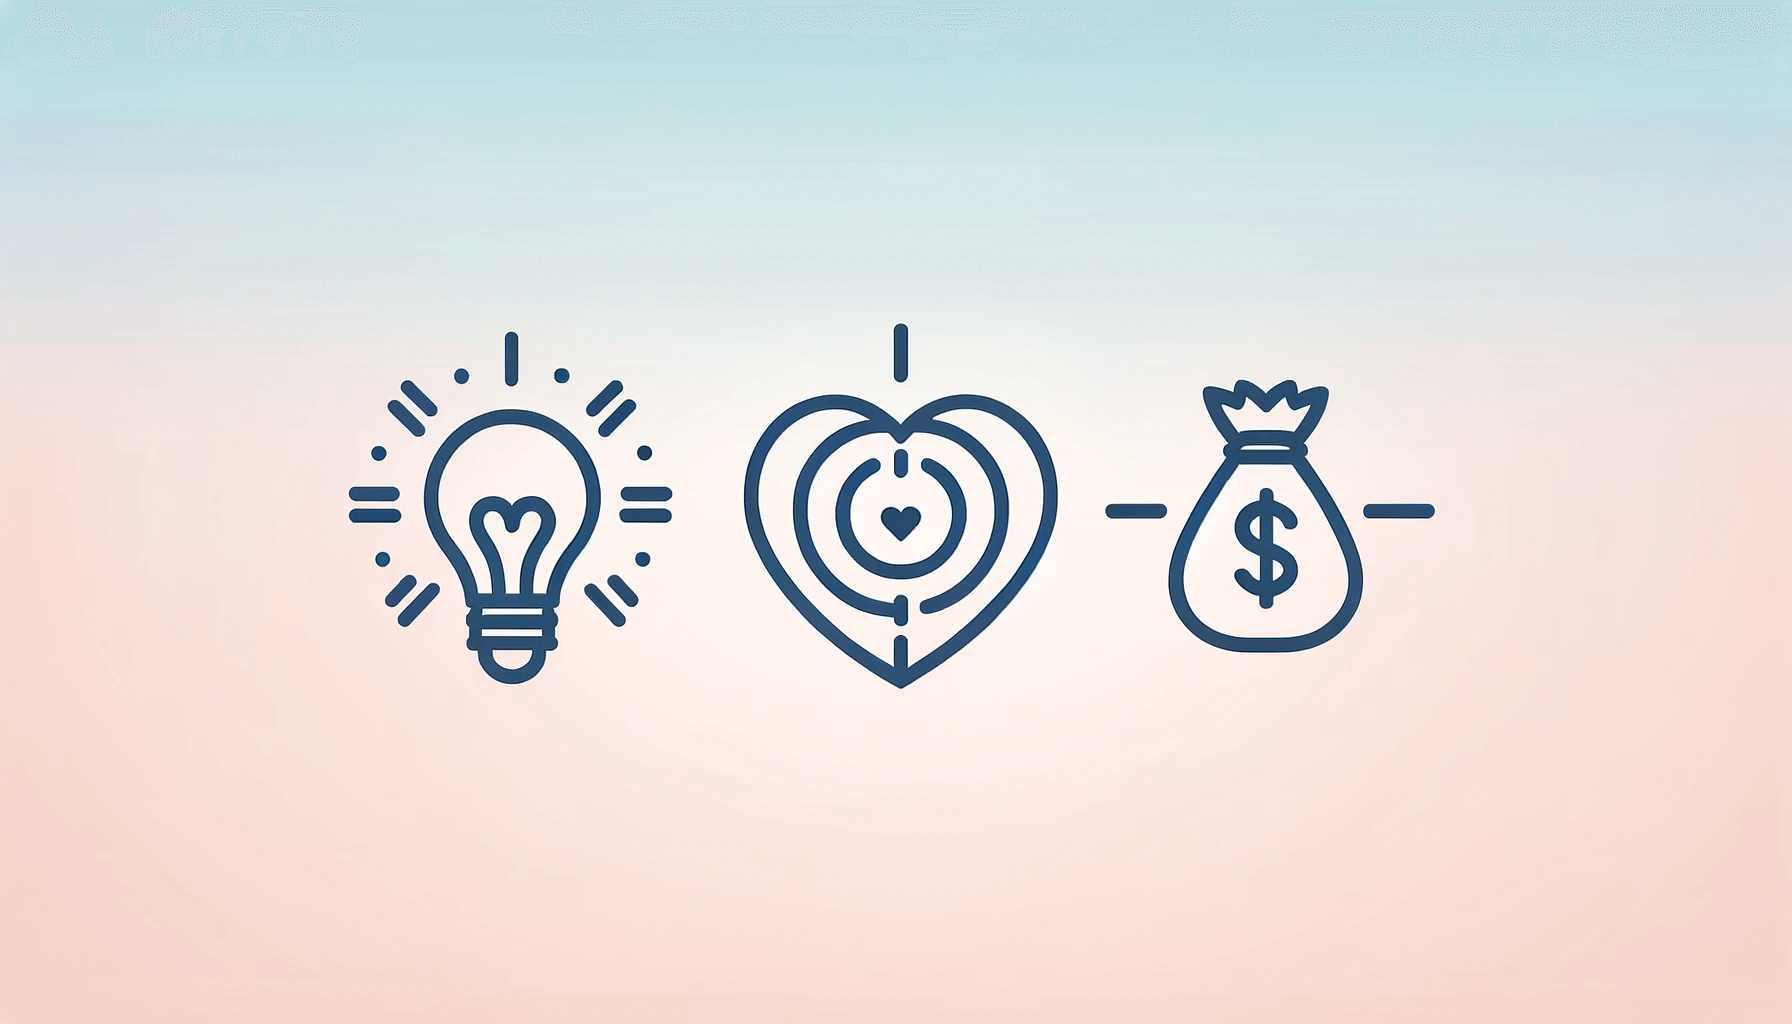 Illustrative image showing symbols for purpose, ideas and profit